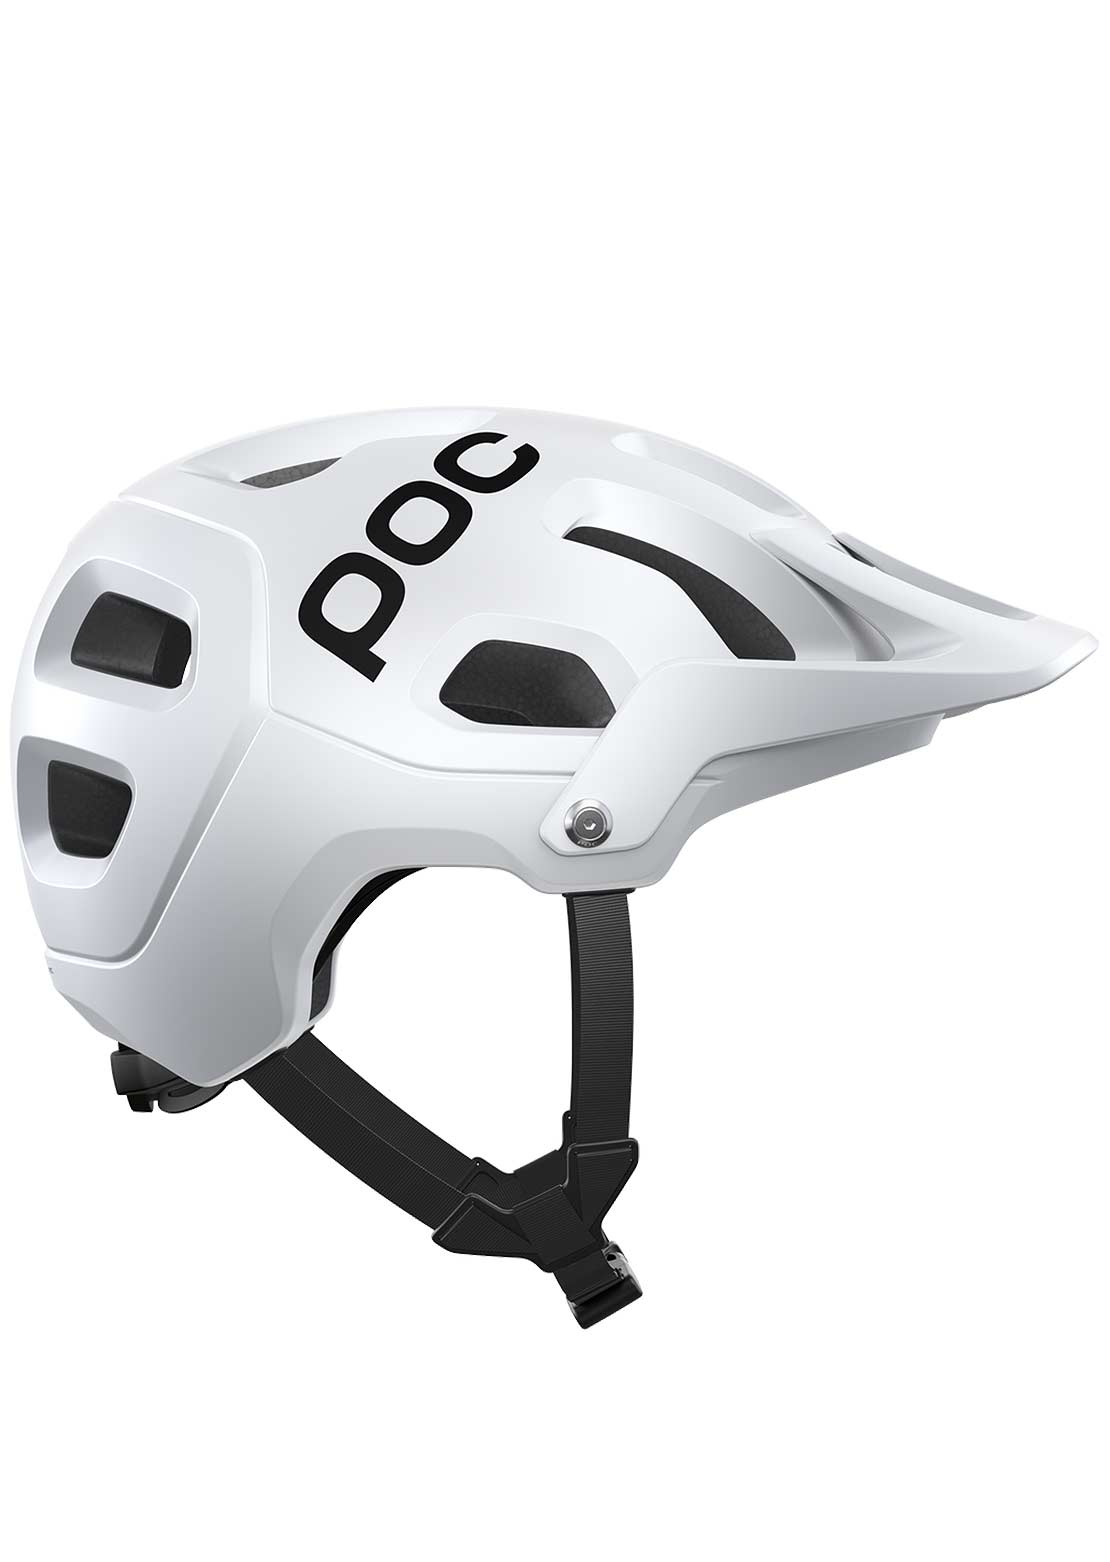 Poc Tectal Mountain Bike Helmet Hydrogen White Matt